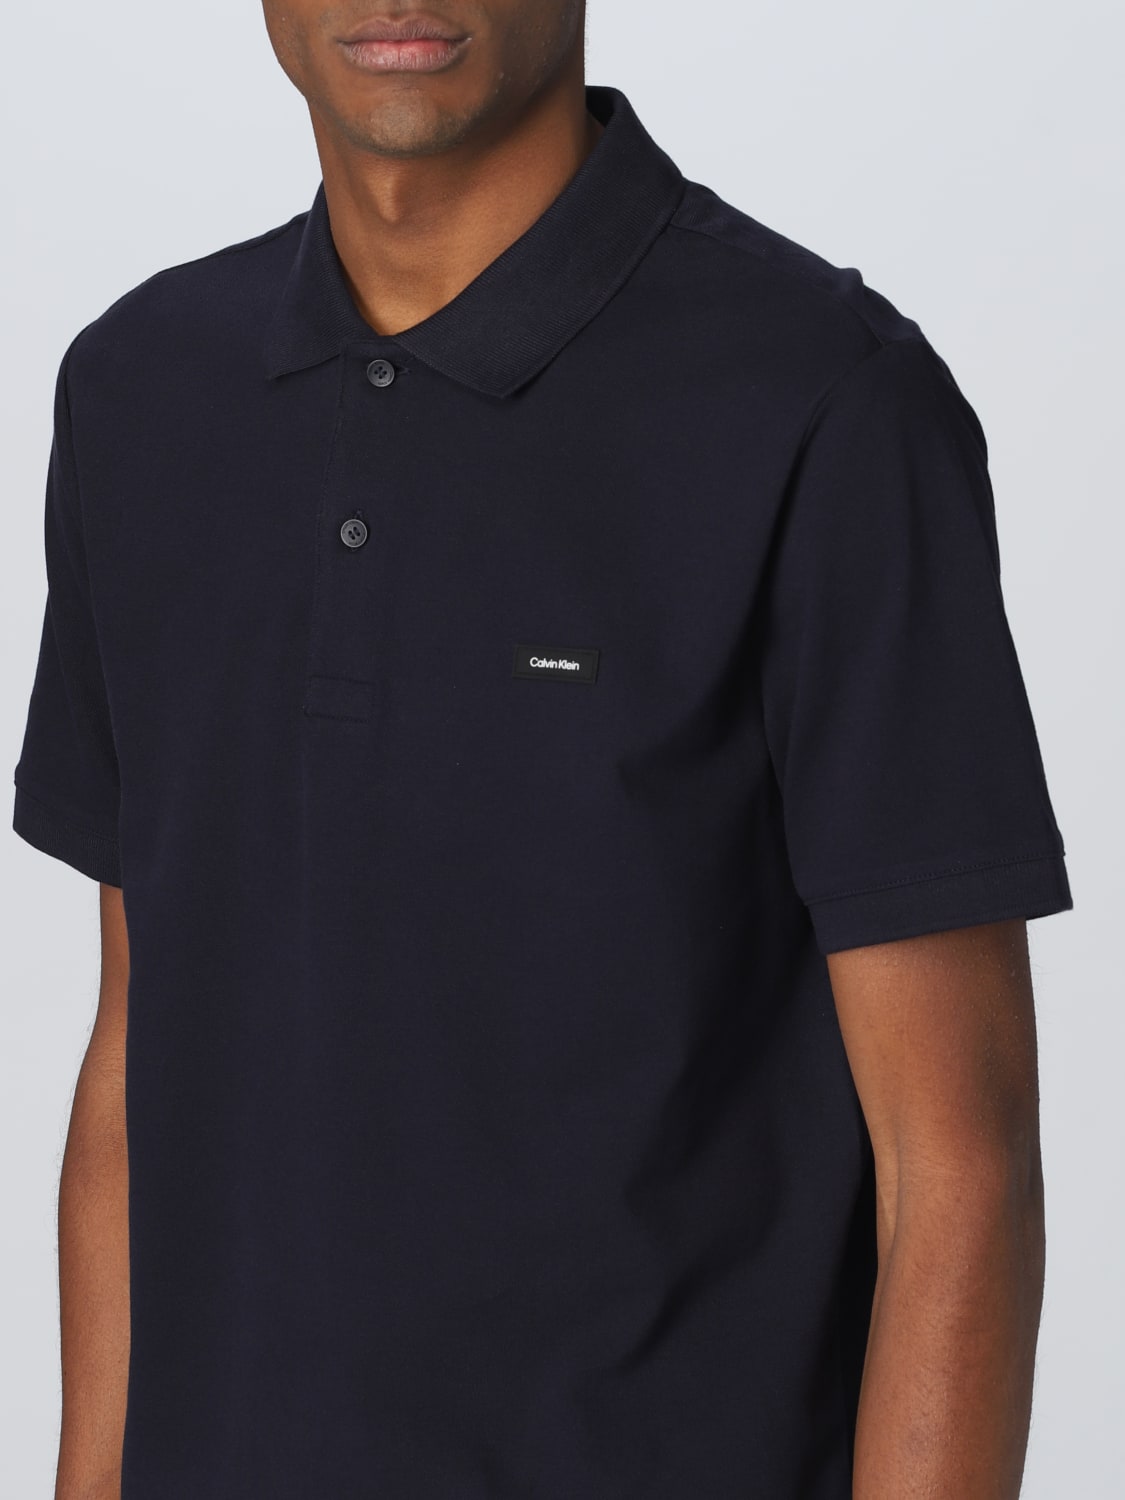 encuentro Asesinar igual CALVIN KLEIN: polo shirt for man - Blue | Calvin Klein polo shirt  K10K111196 online on GIGLIO.COM